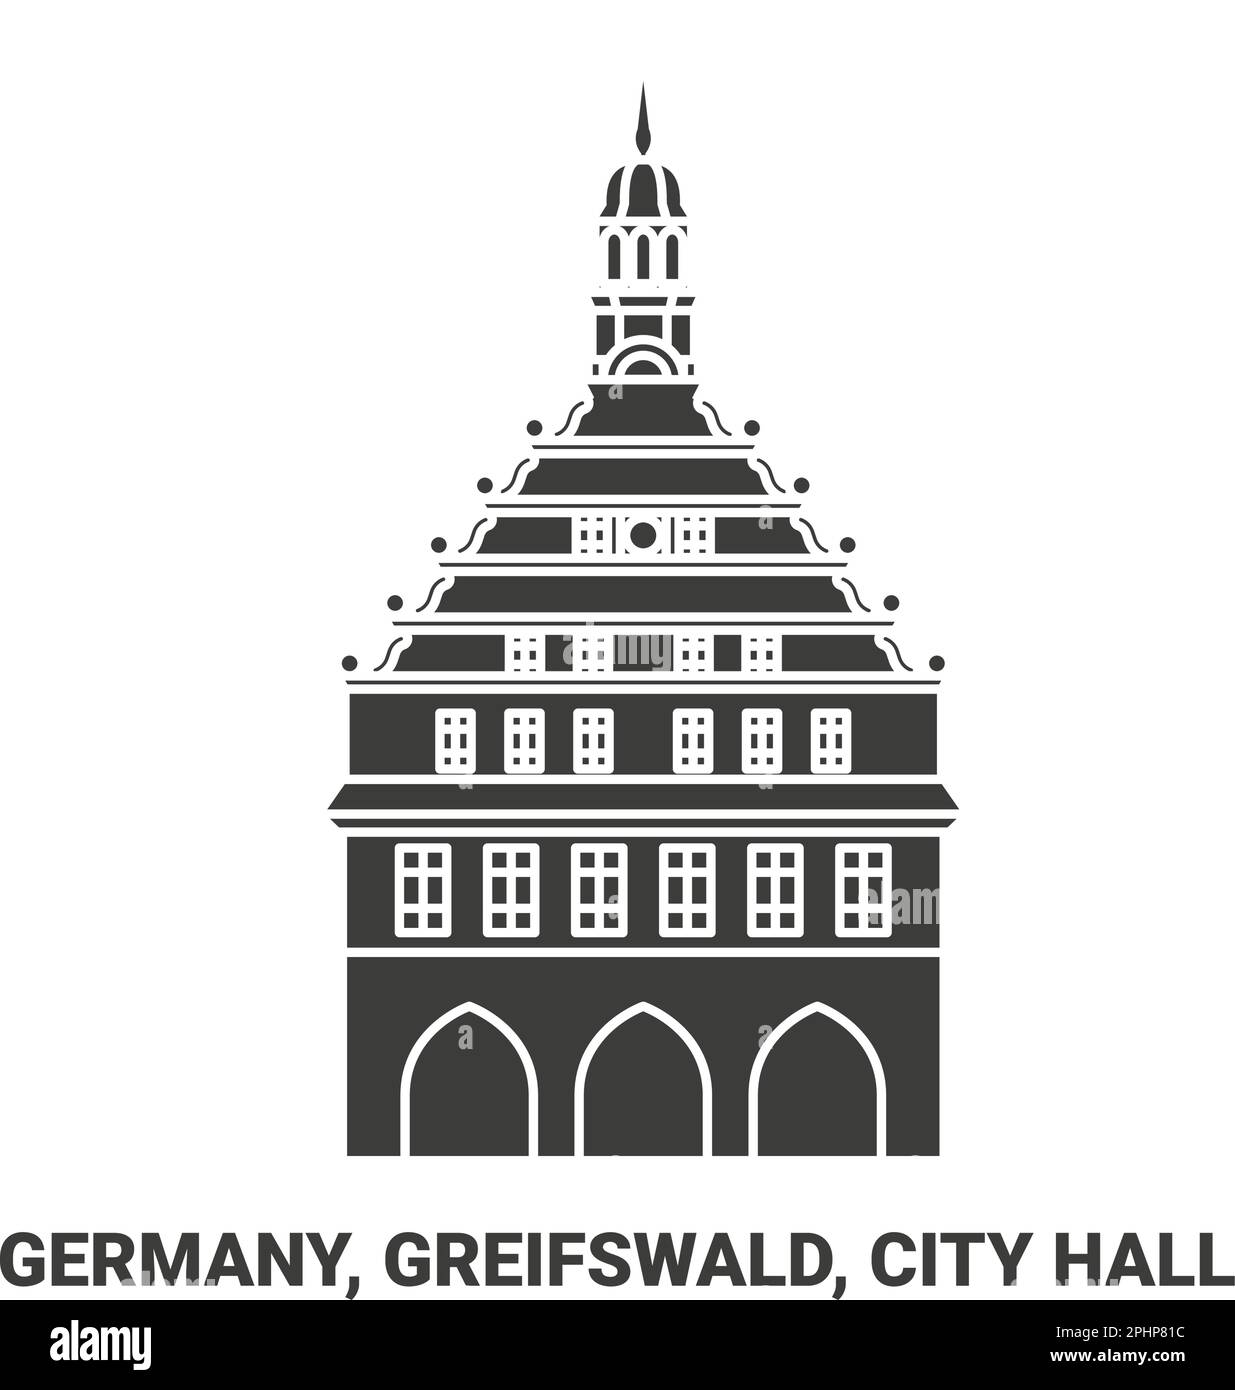 Germany, Greifswald, City Hall travel landmark vector illustration Stock Vector